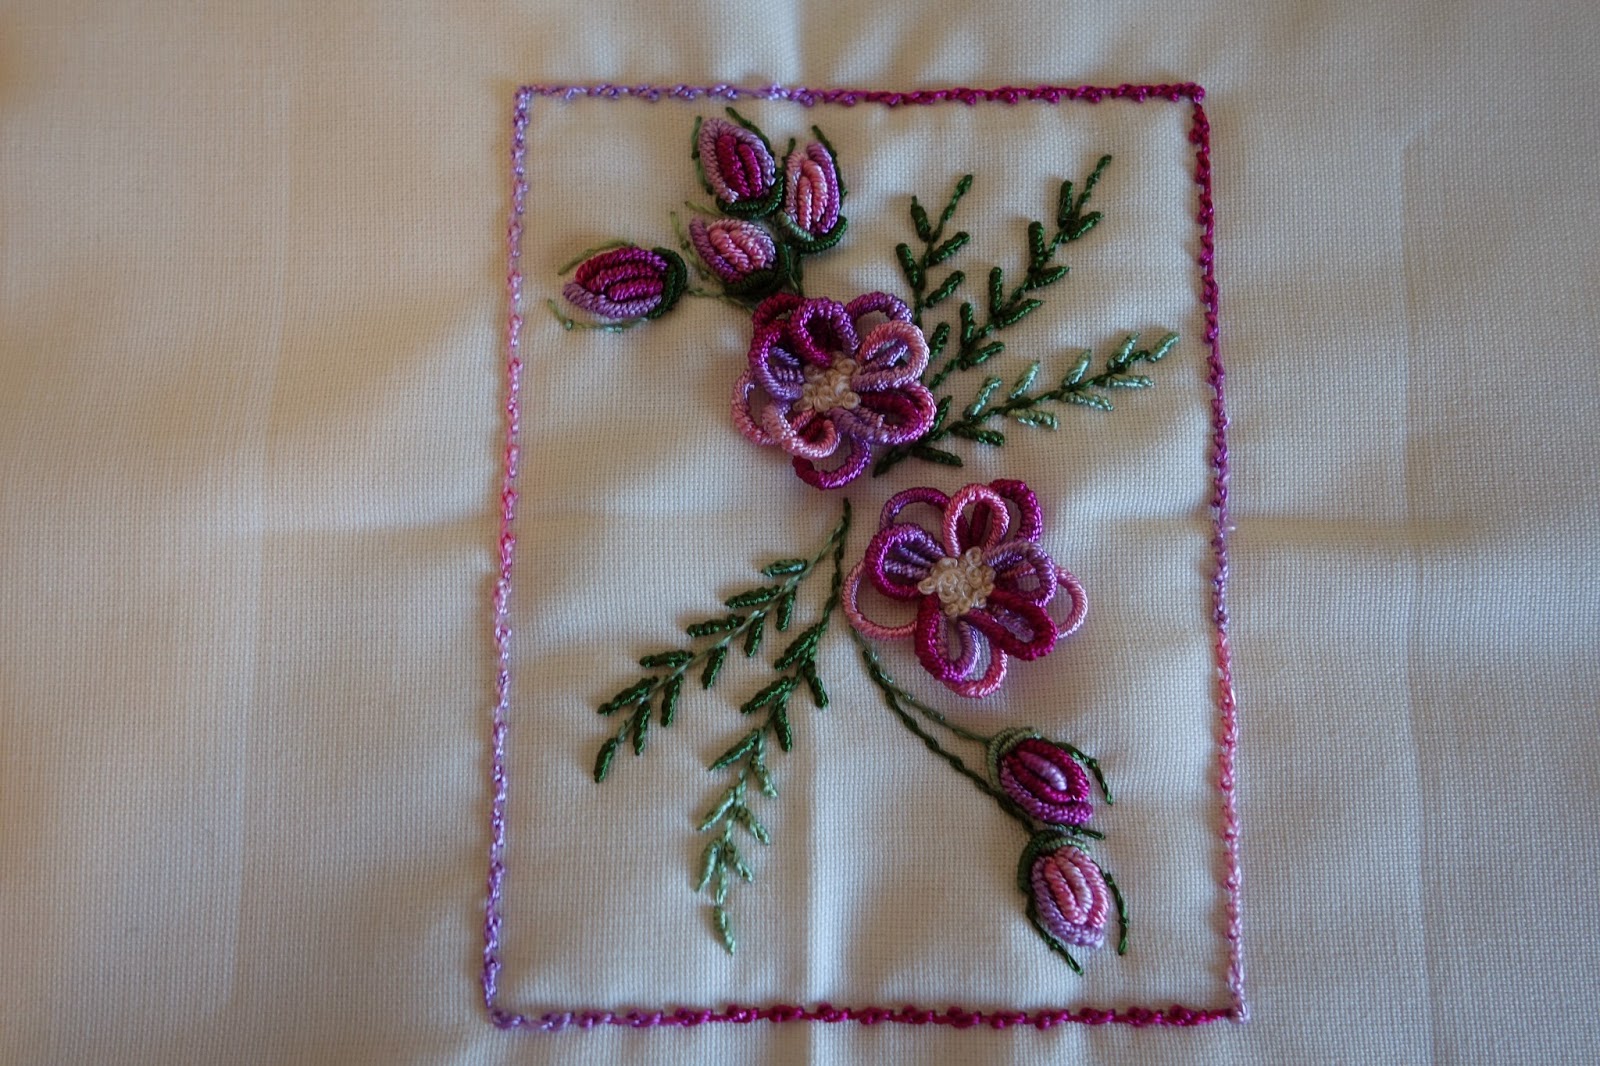 Sew Fun 2 Quilt: Brazilian Embroidery